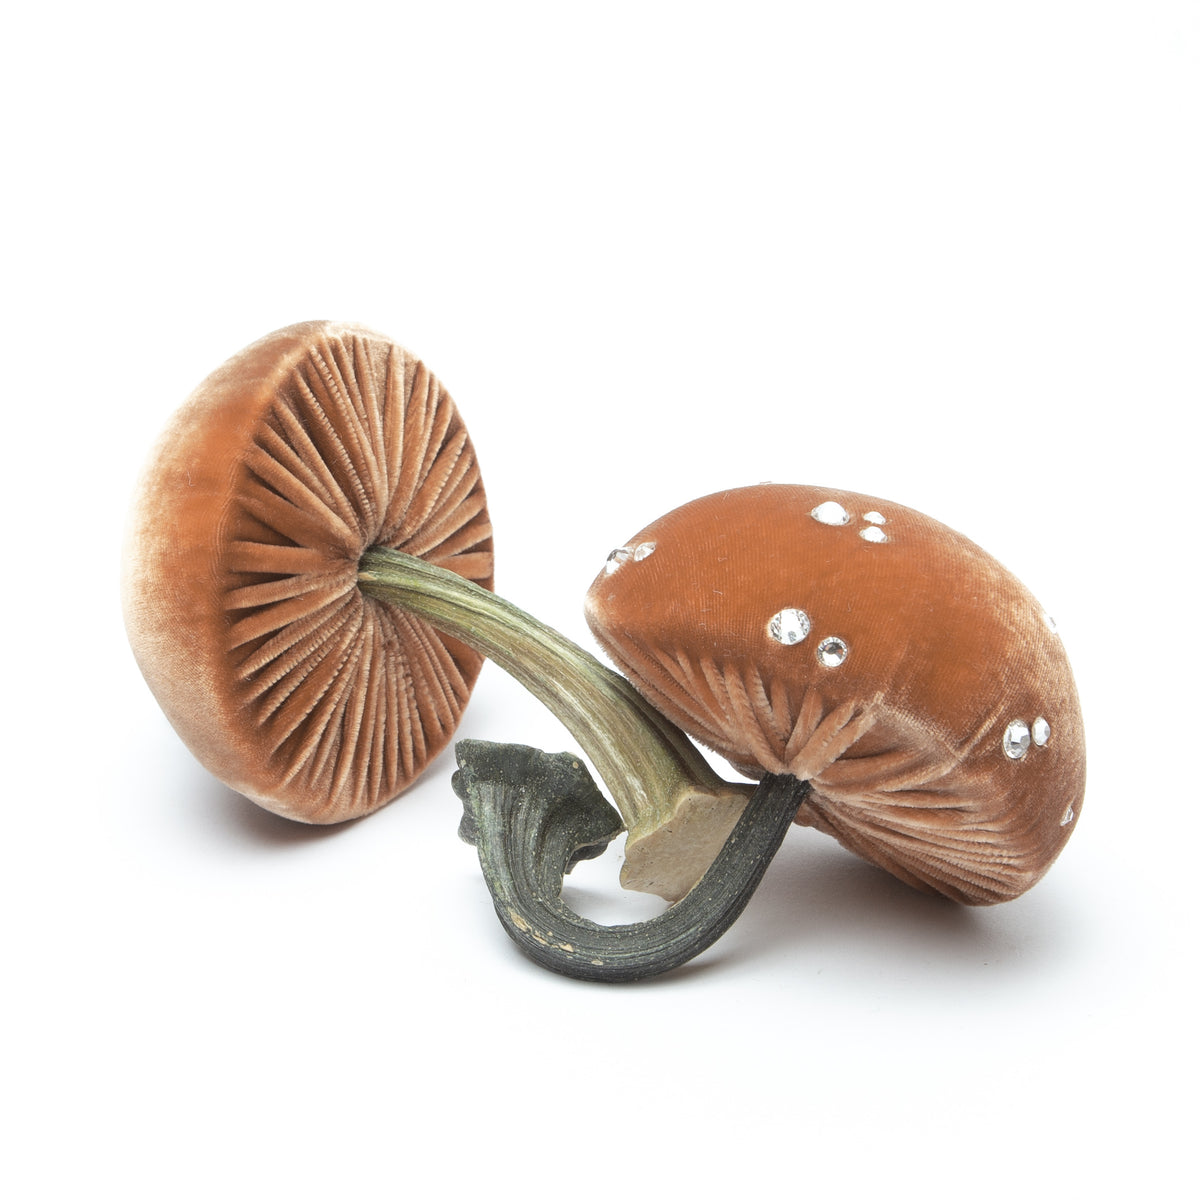 Small Spice Mushrooms